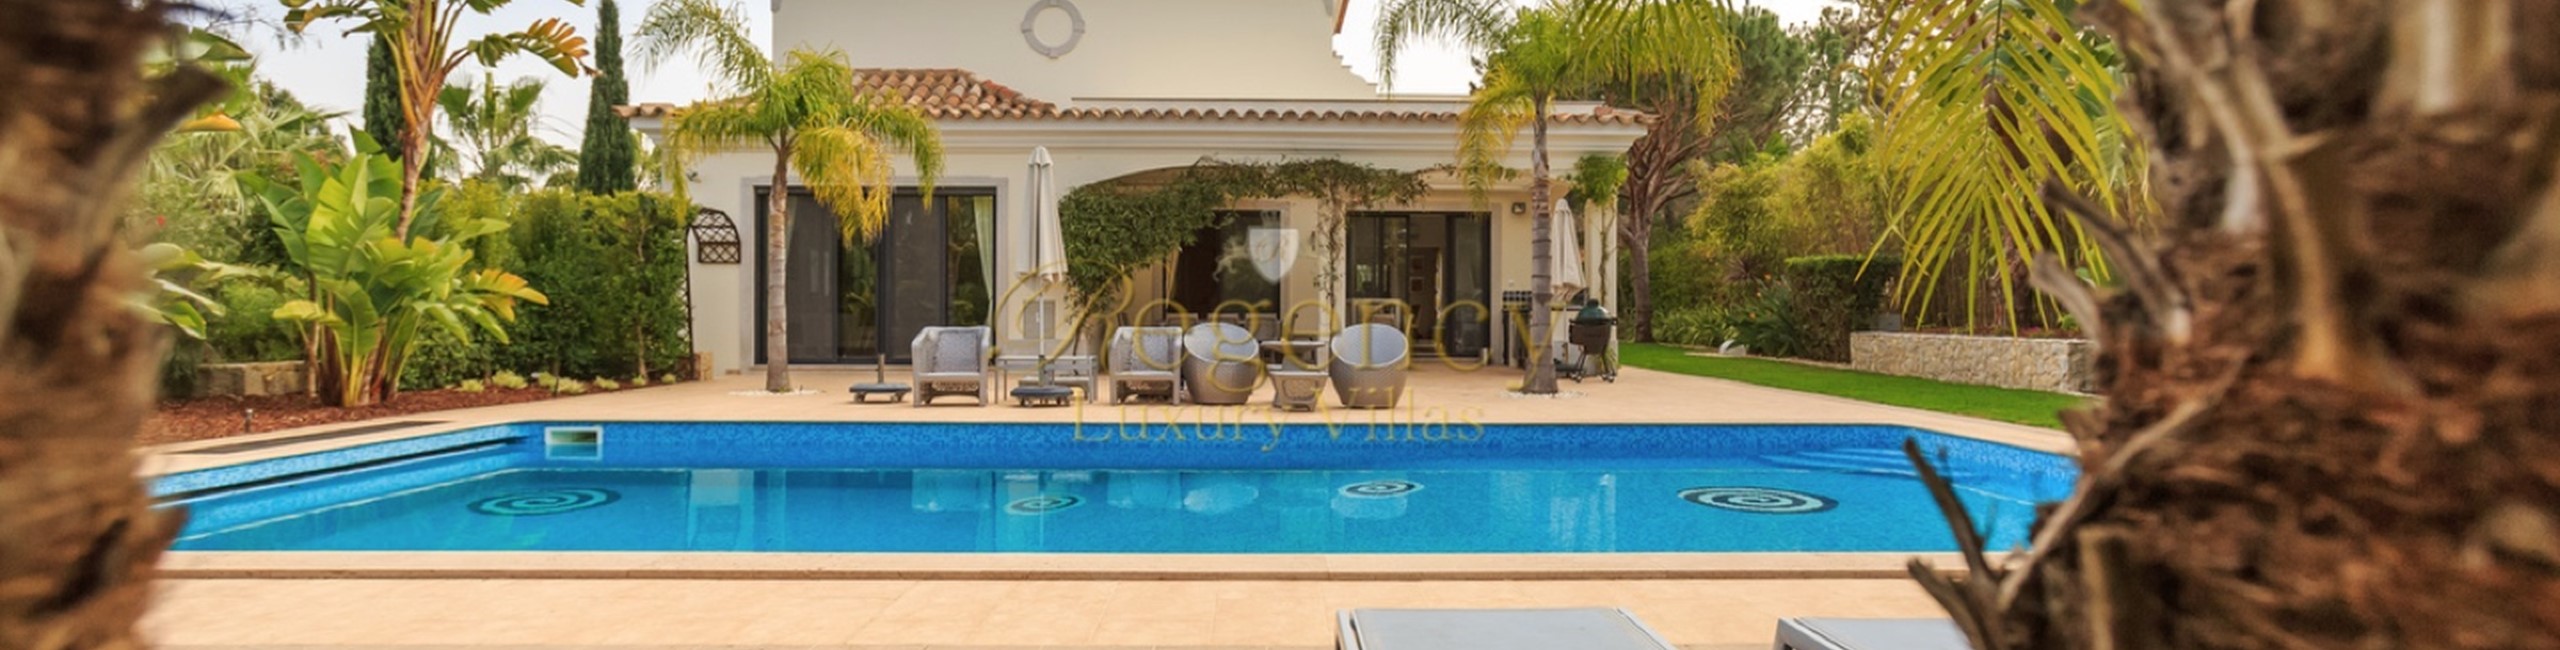 Quinta Do Lago Luxury Villa To Rent 5 Bedrooms With Pool Regency Luxury Villas